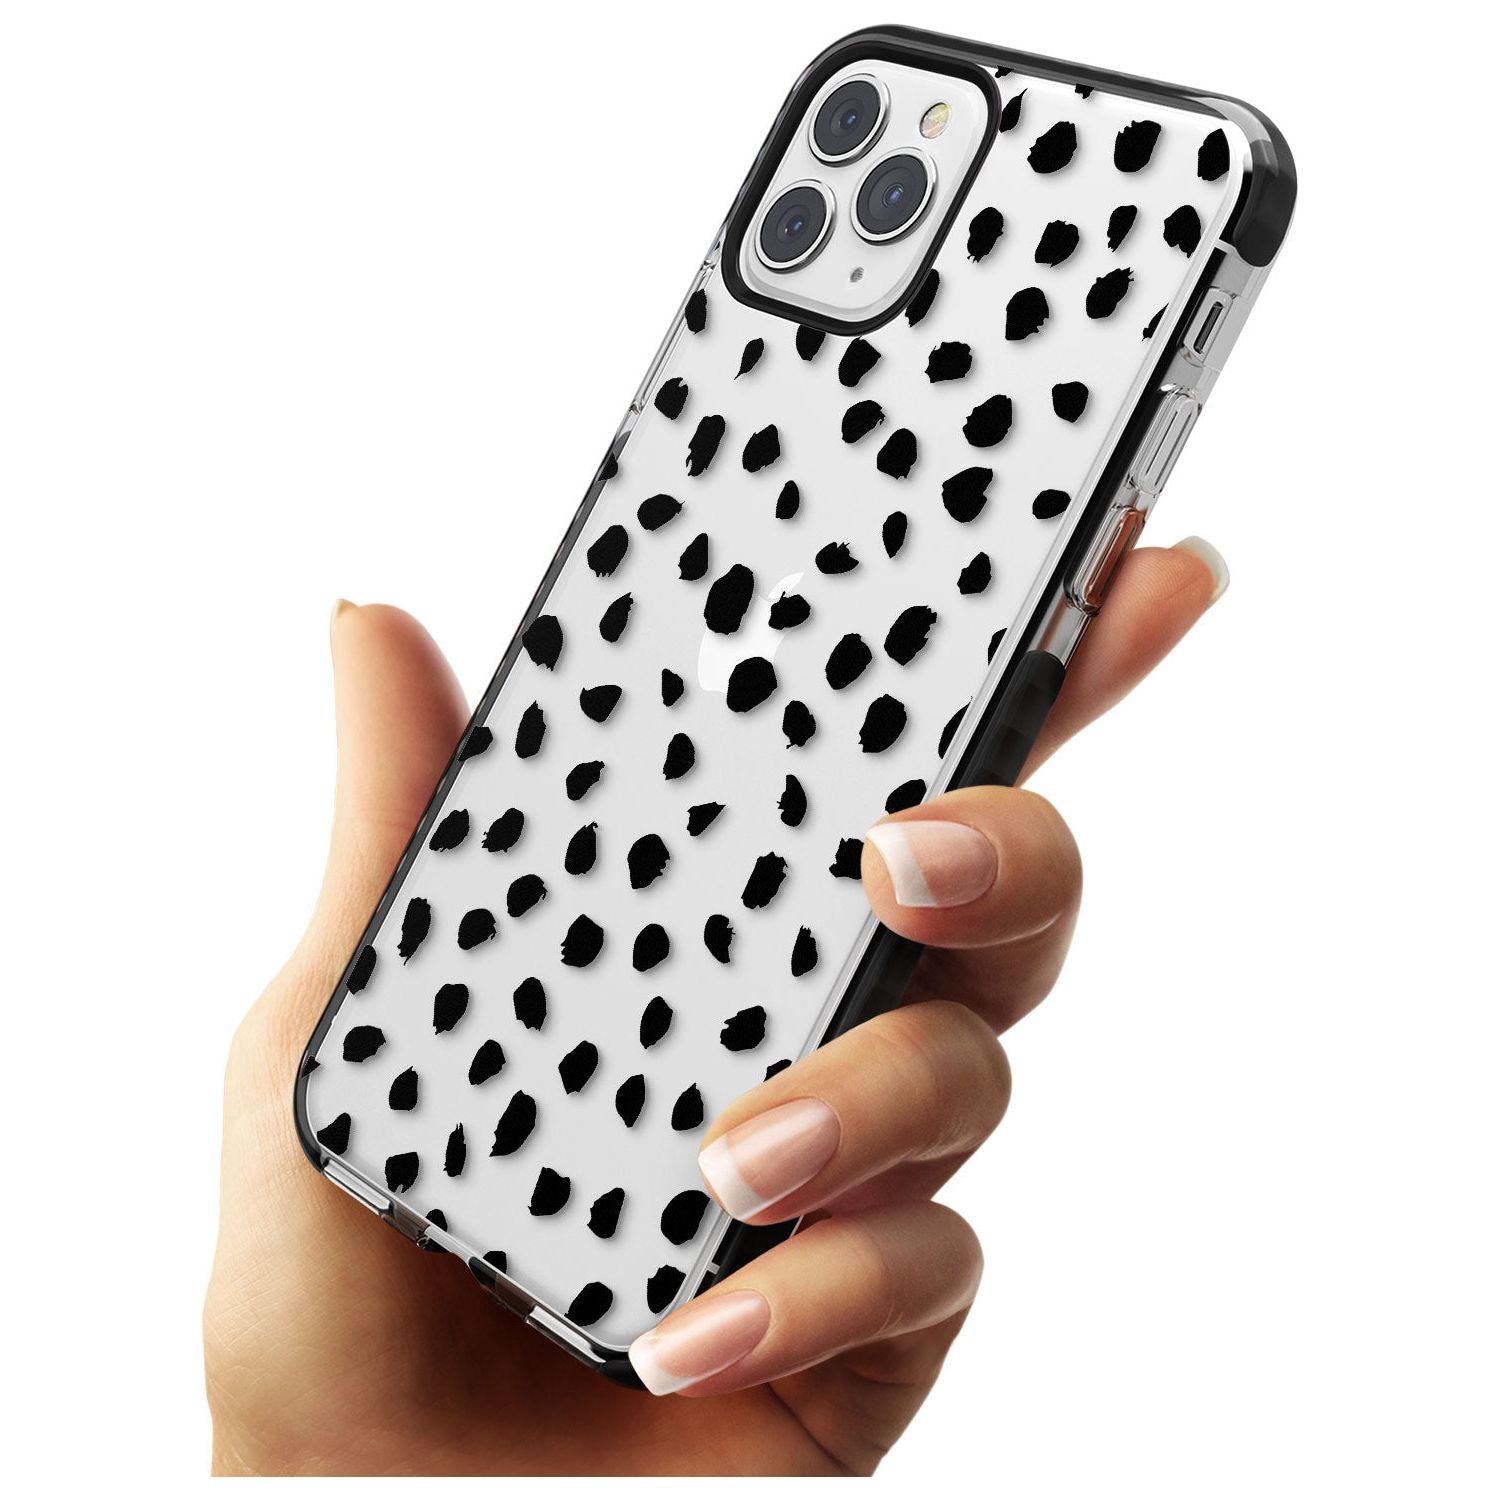 Black on Transparent Dalmatian Polka Dot Spots Black Impact Phone Case for iPhone 11 Pro Max